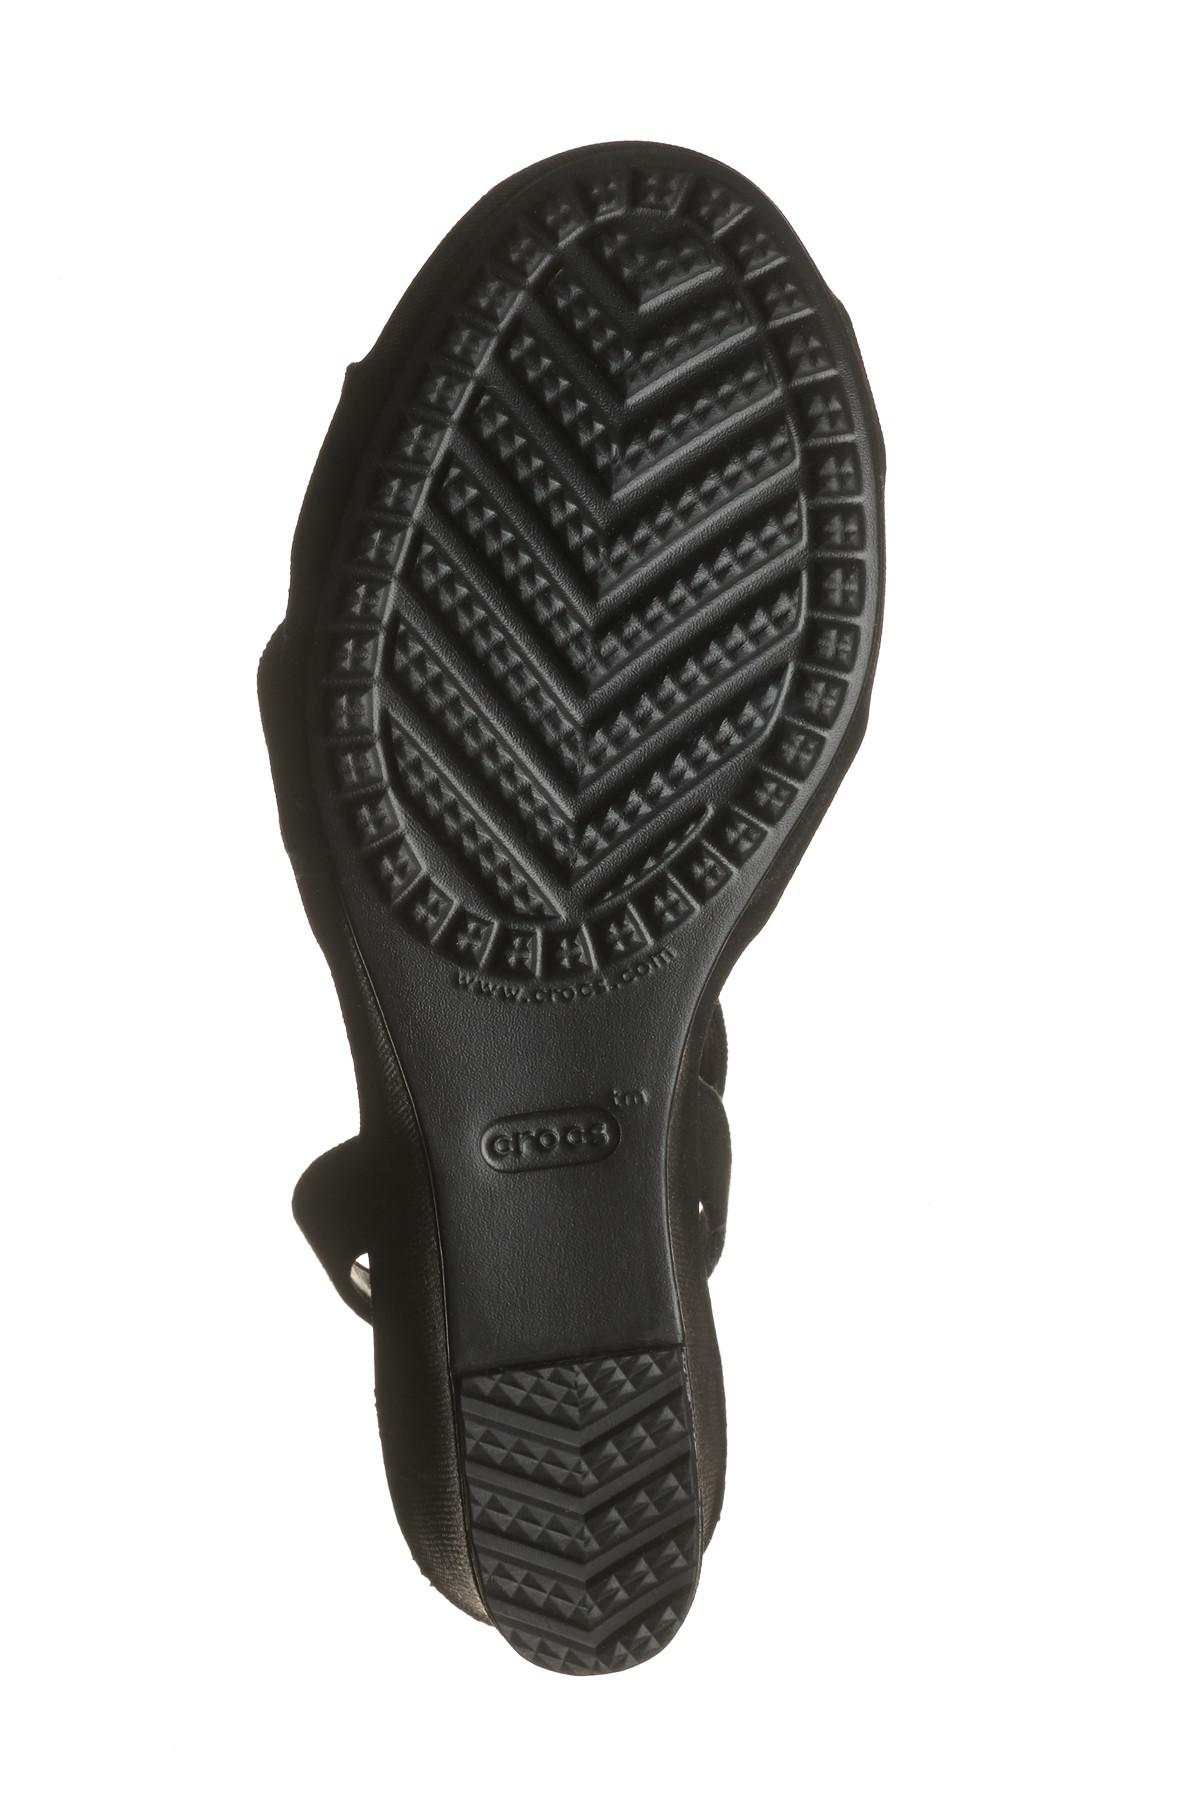 Crocs™ Canvas Women's Leigh Ii Cross-strap Ankle Wedge in Black/Black (Black)  - Save 76% | Lyst